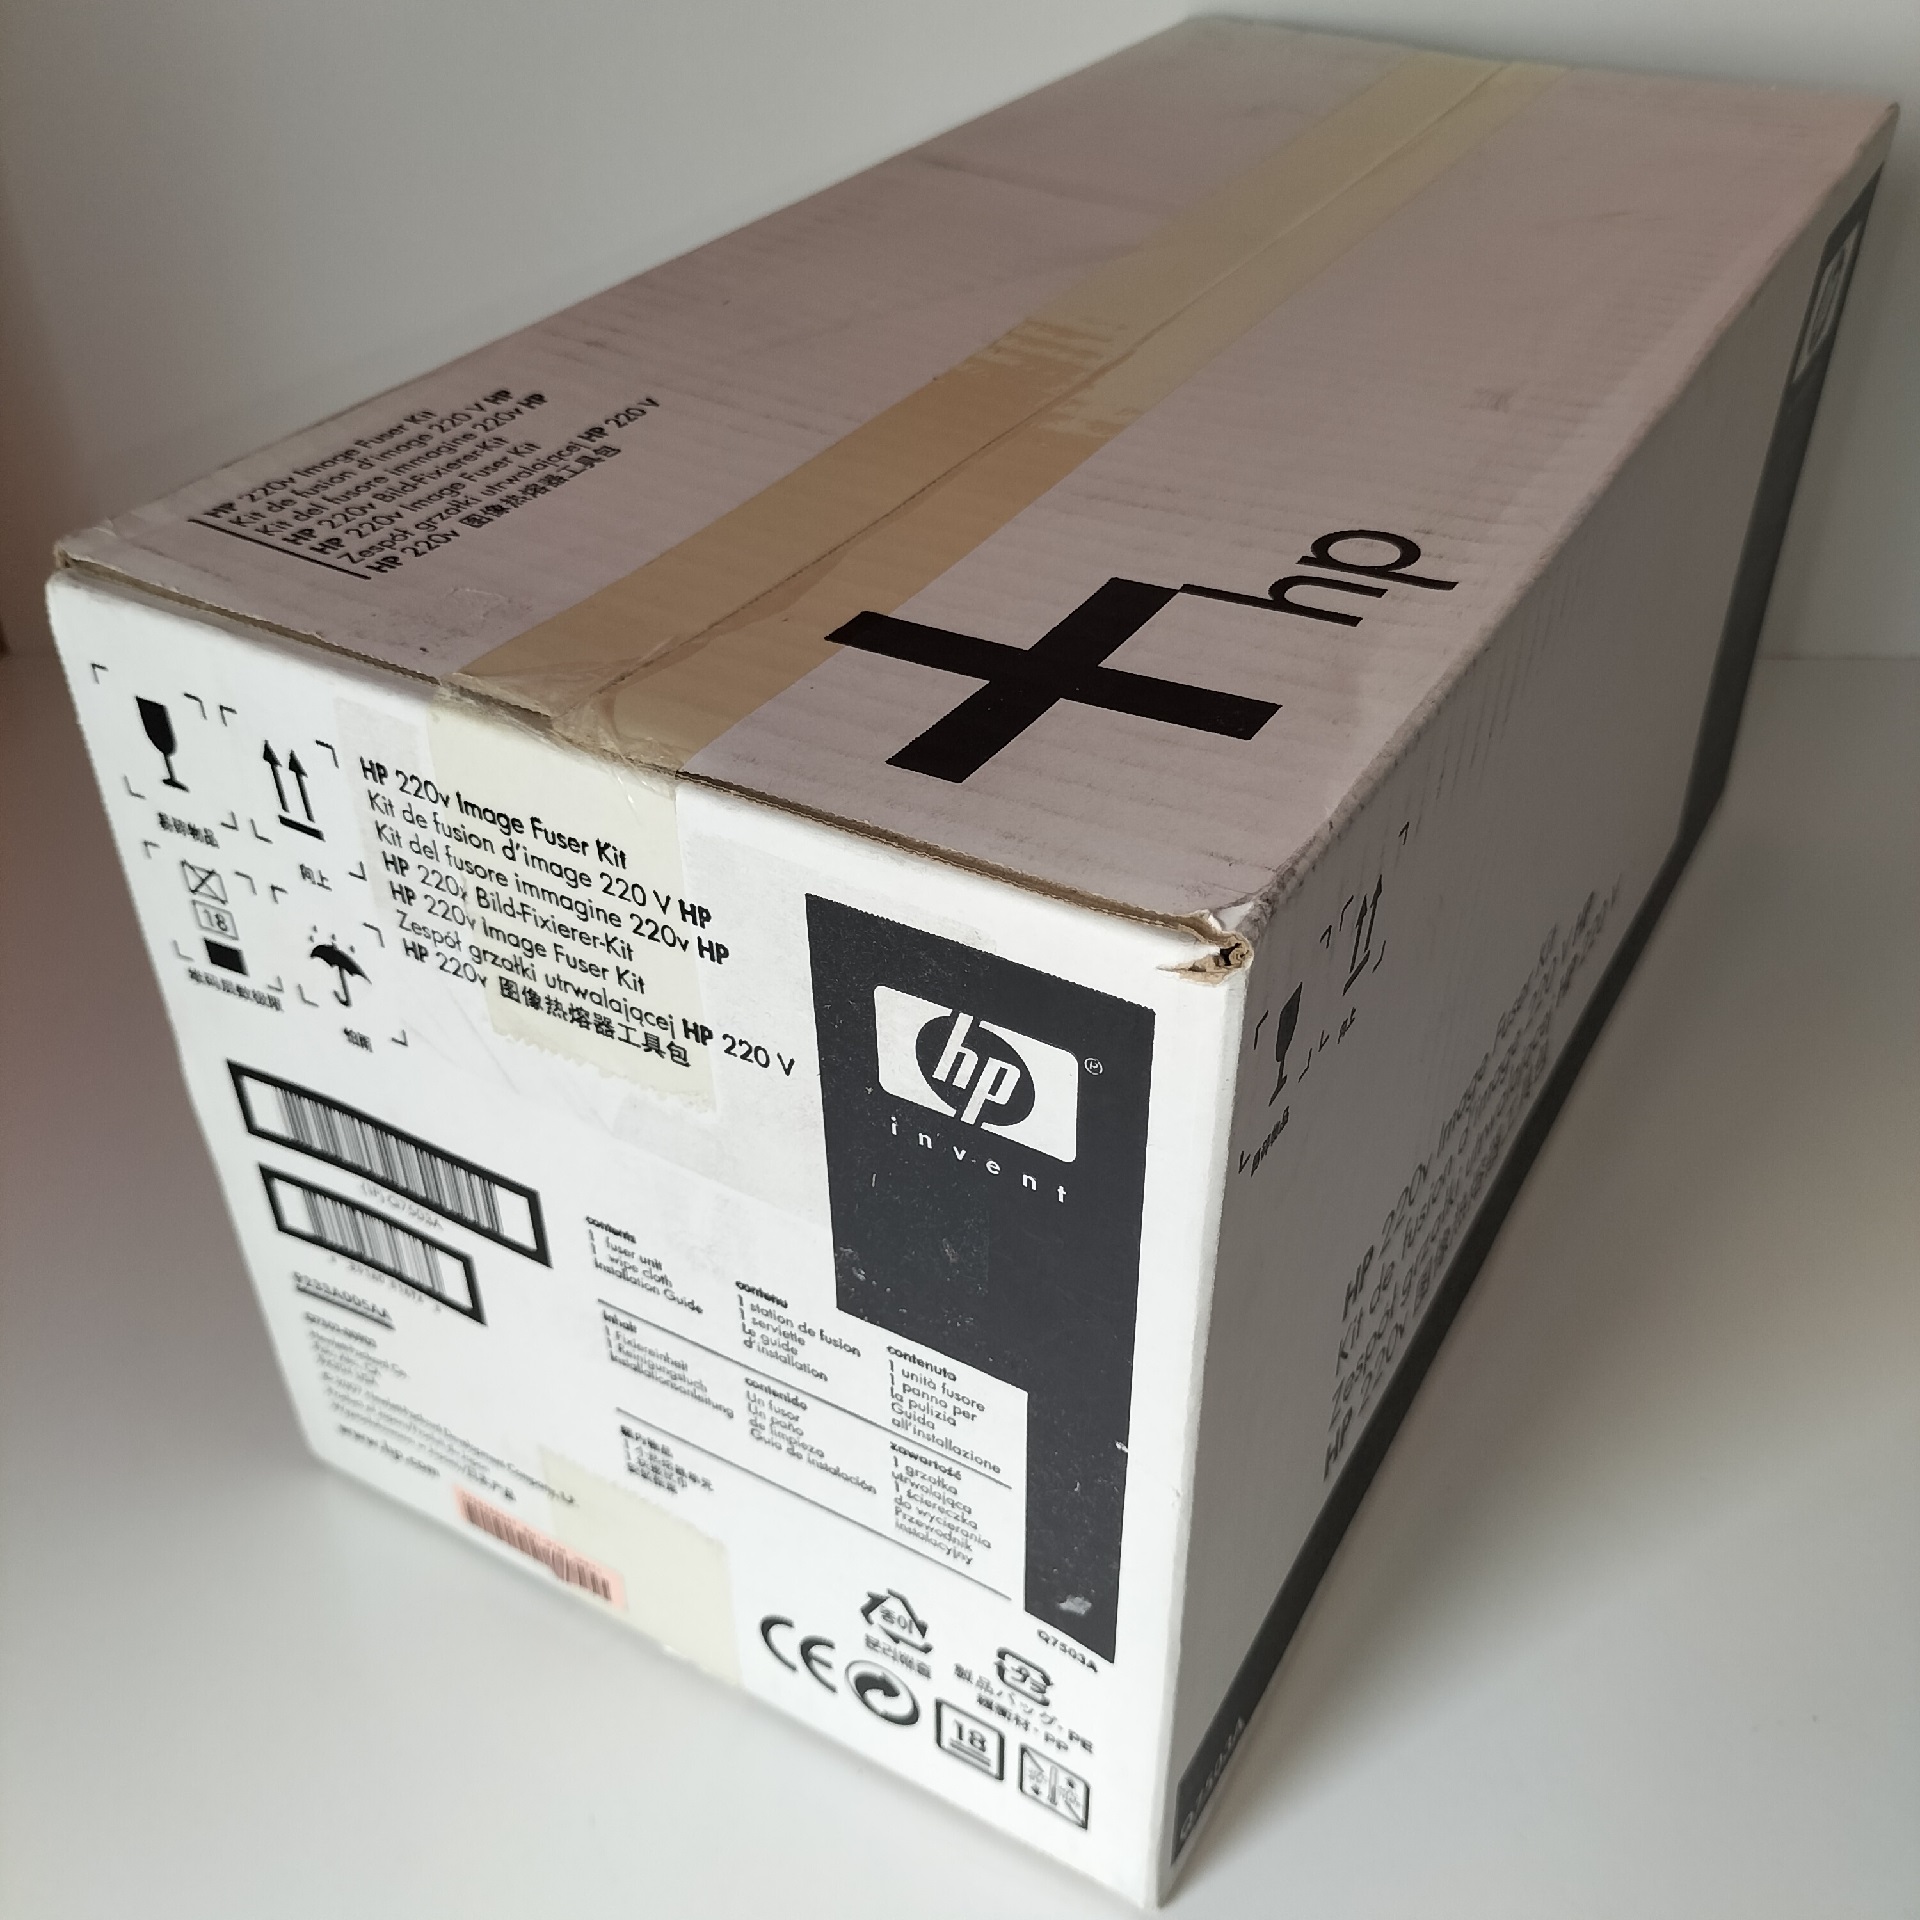 HP Q7503-00903 image fuser kit